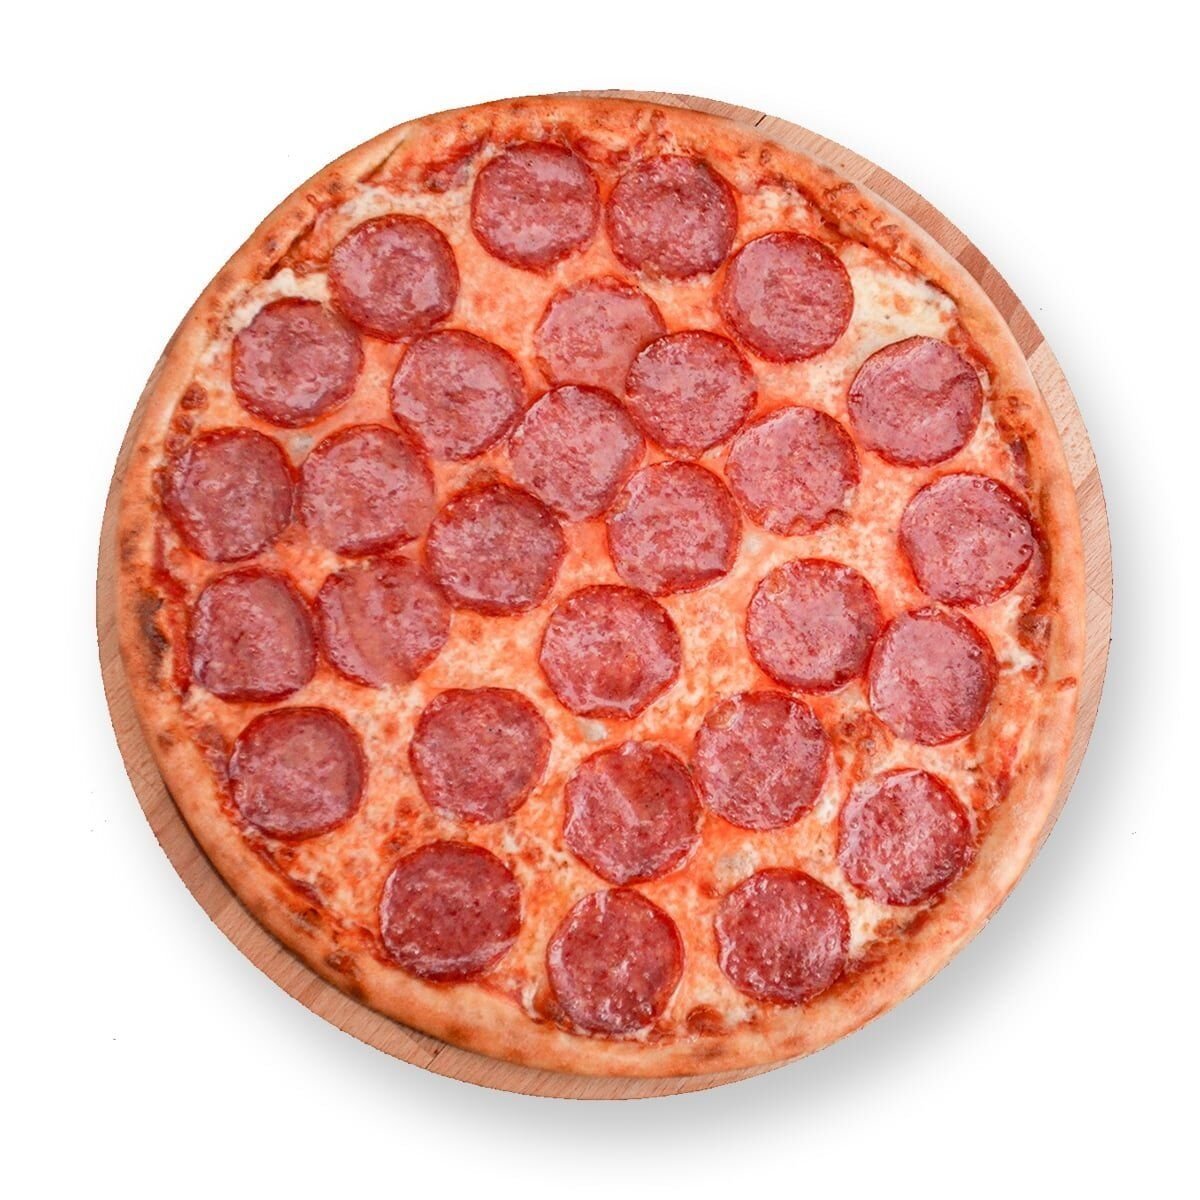 фото пиццы на белом фоне пепперони фото 107